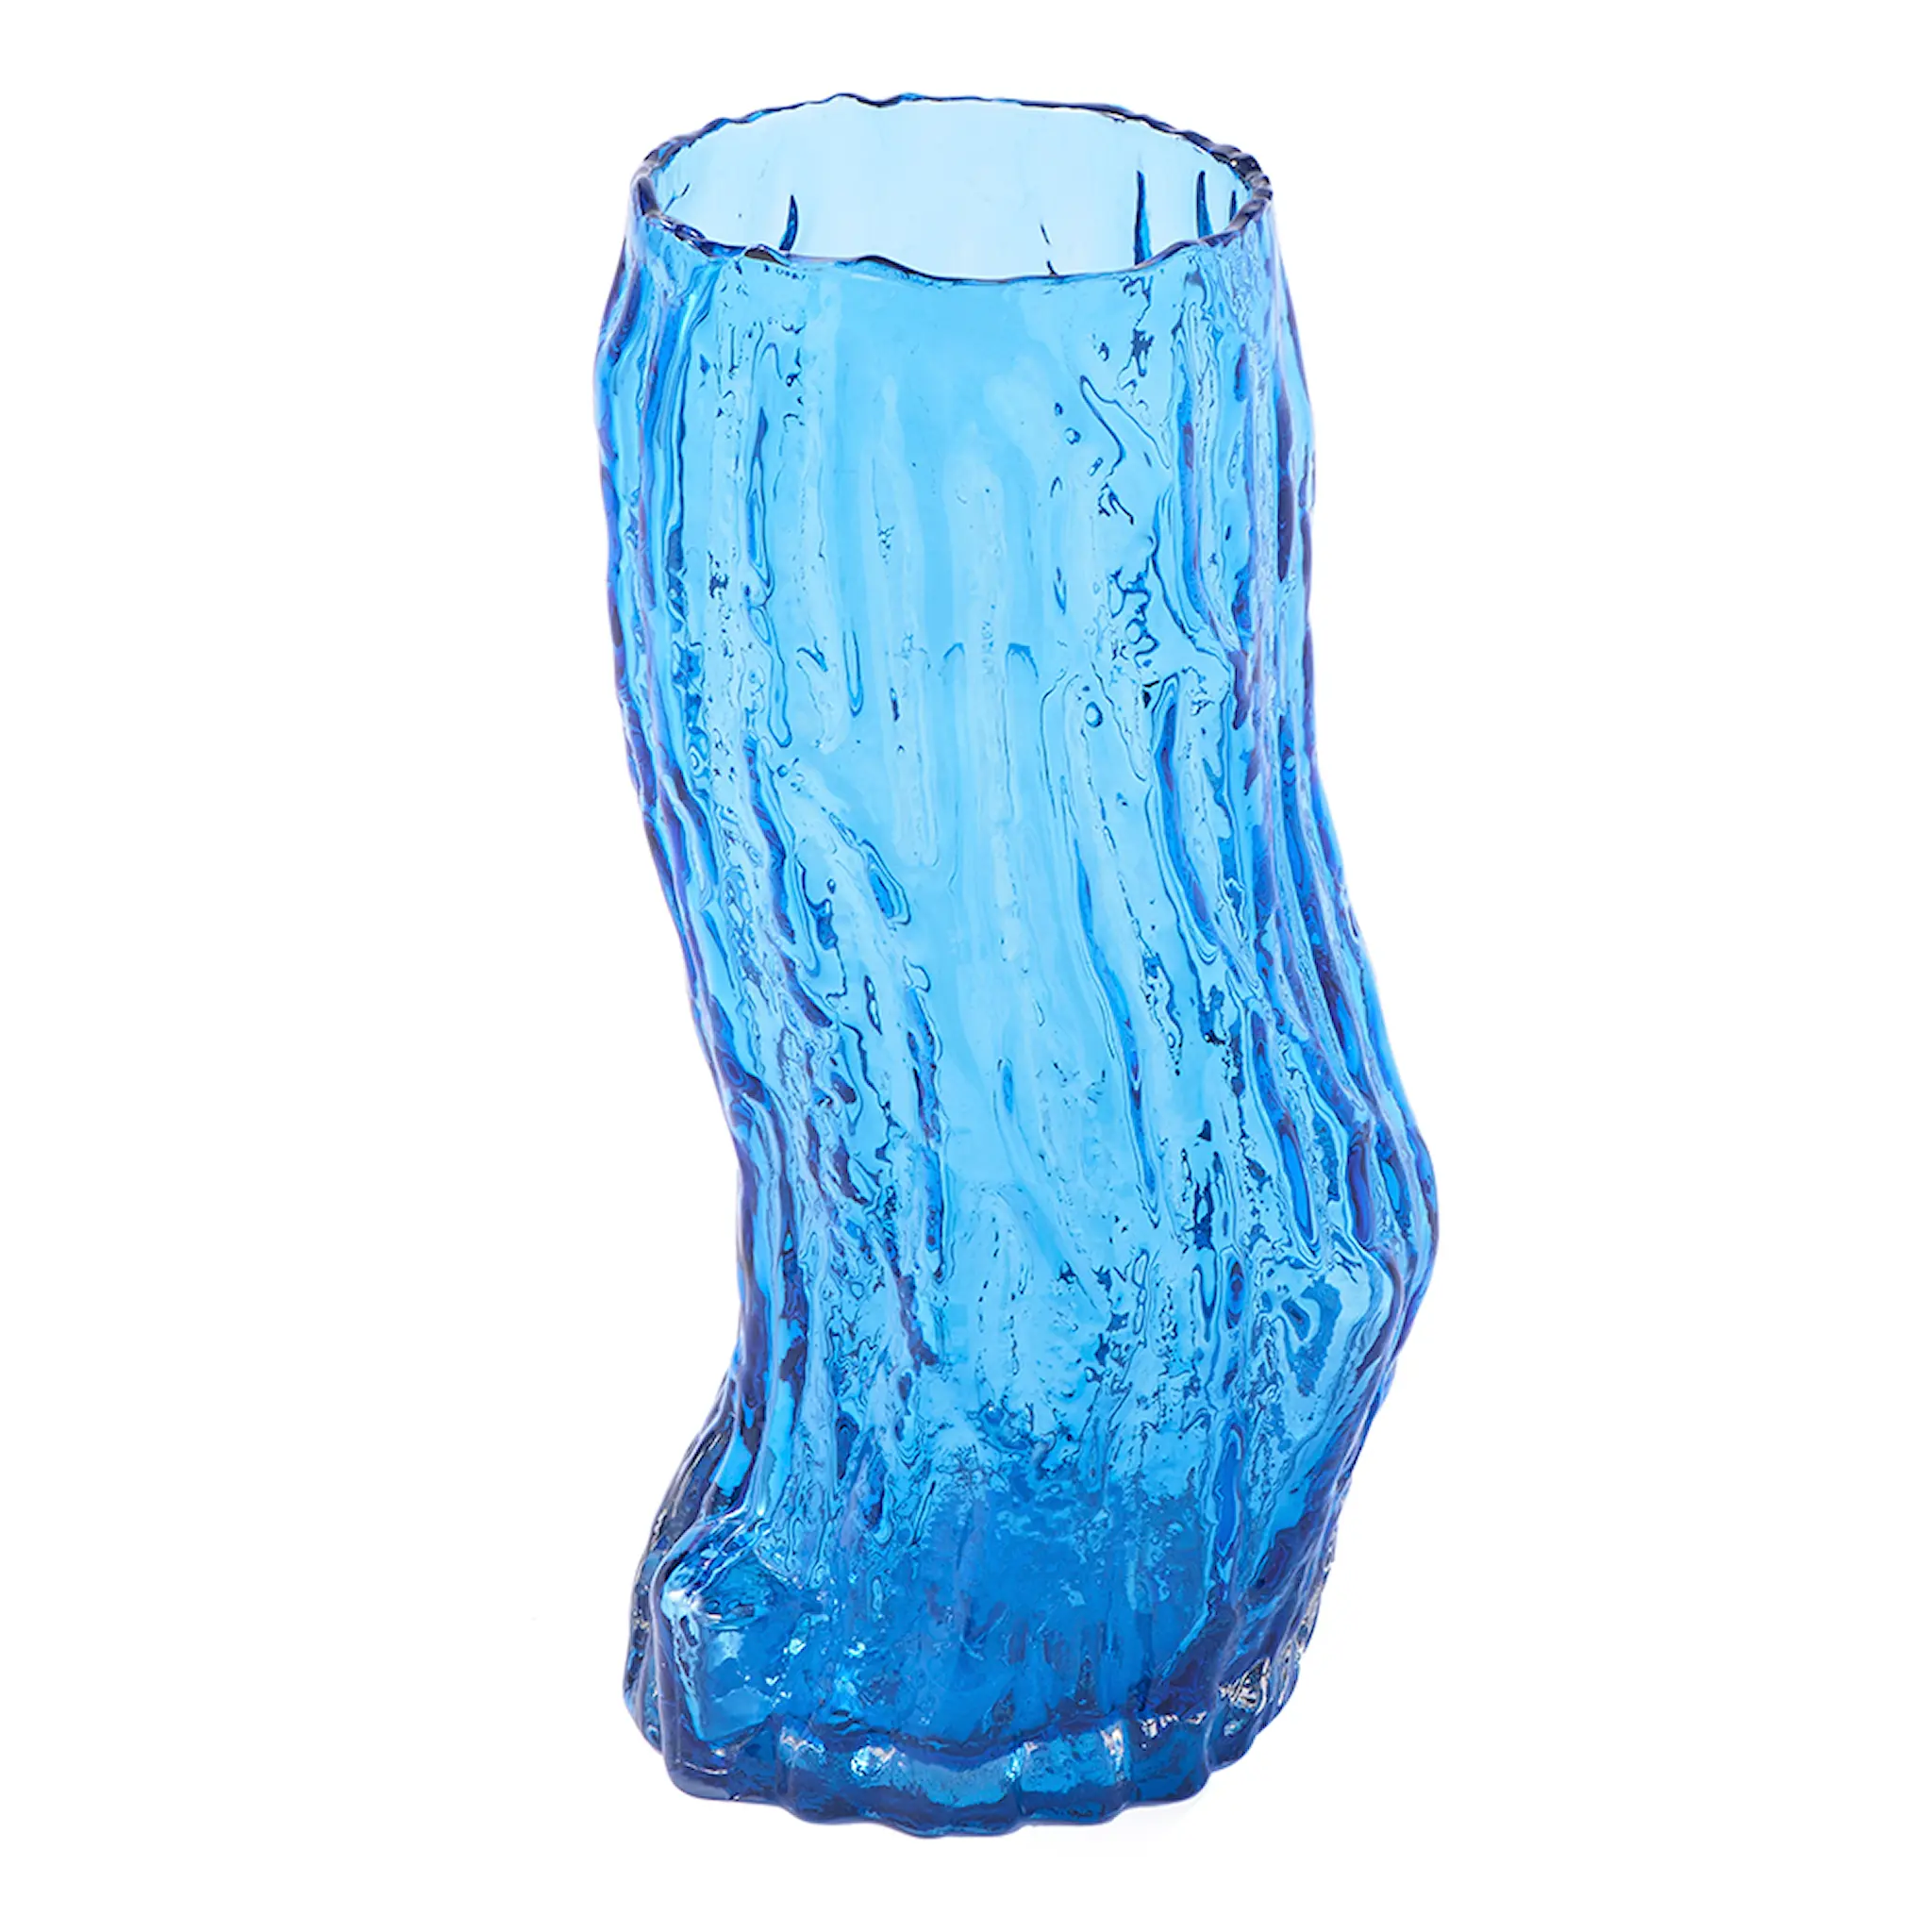 Pols Potten Tree log vase 44 cm blå